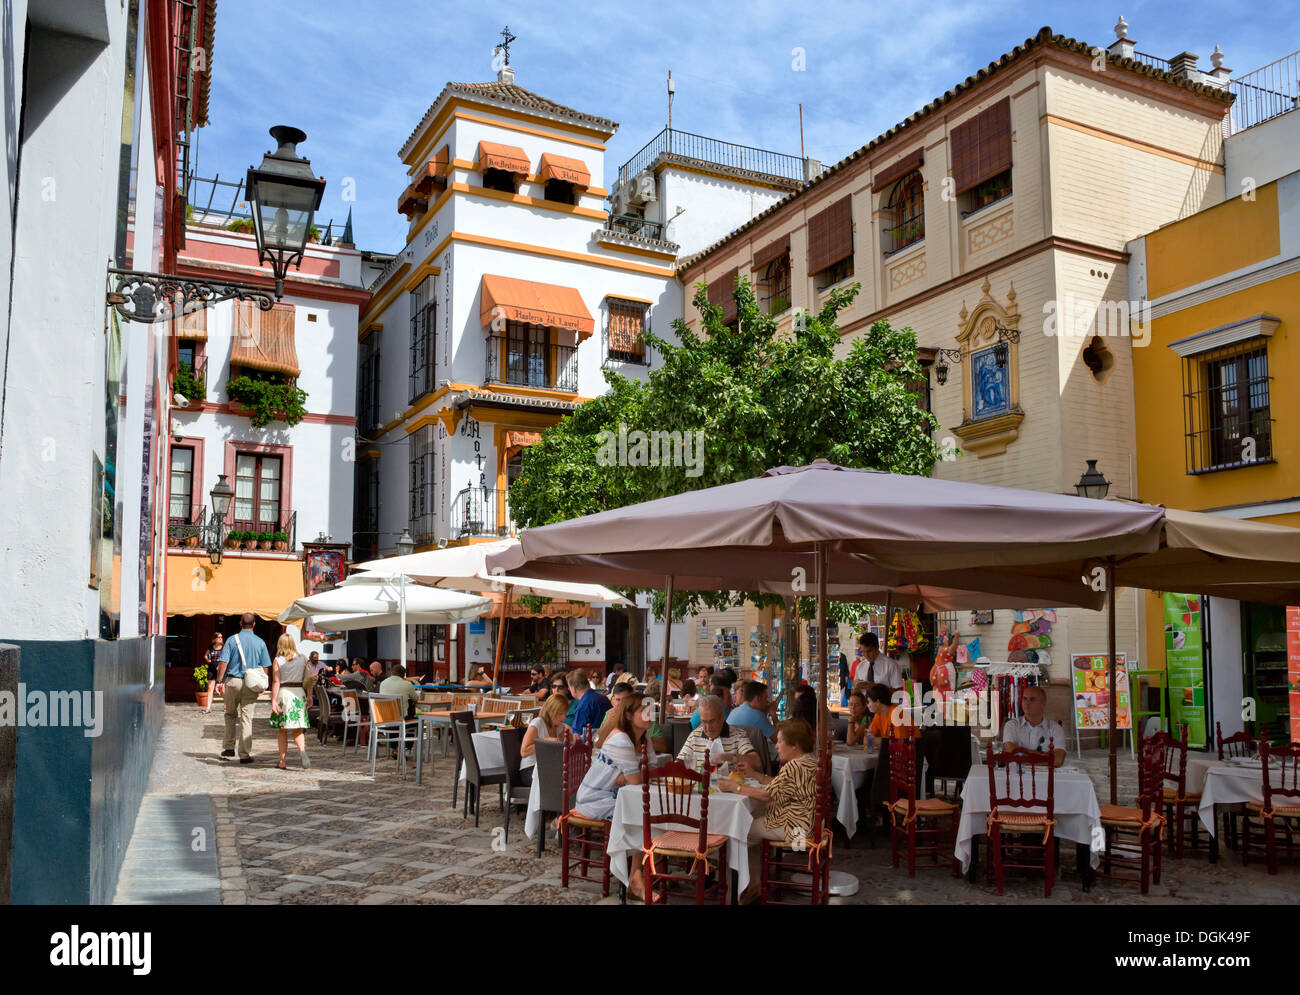 Plaza de los Venerables, Barrio santa Cruz, Seville, Andalusia, Spain Stock Photo